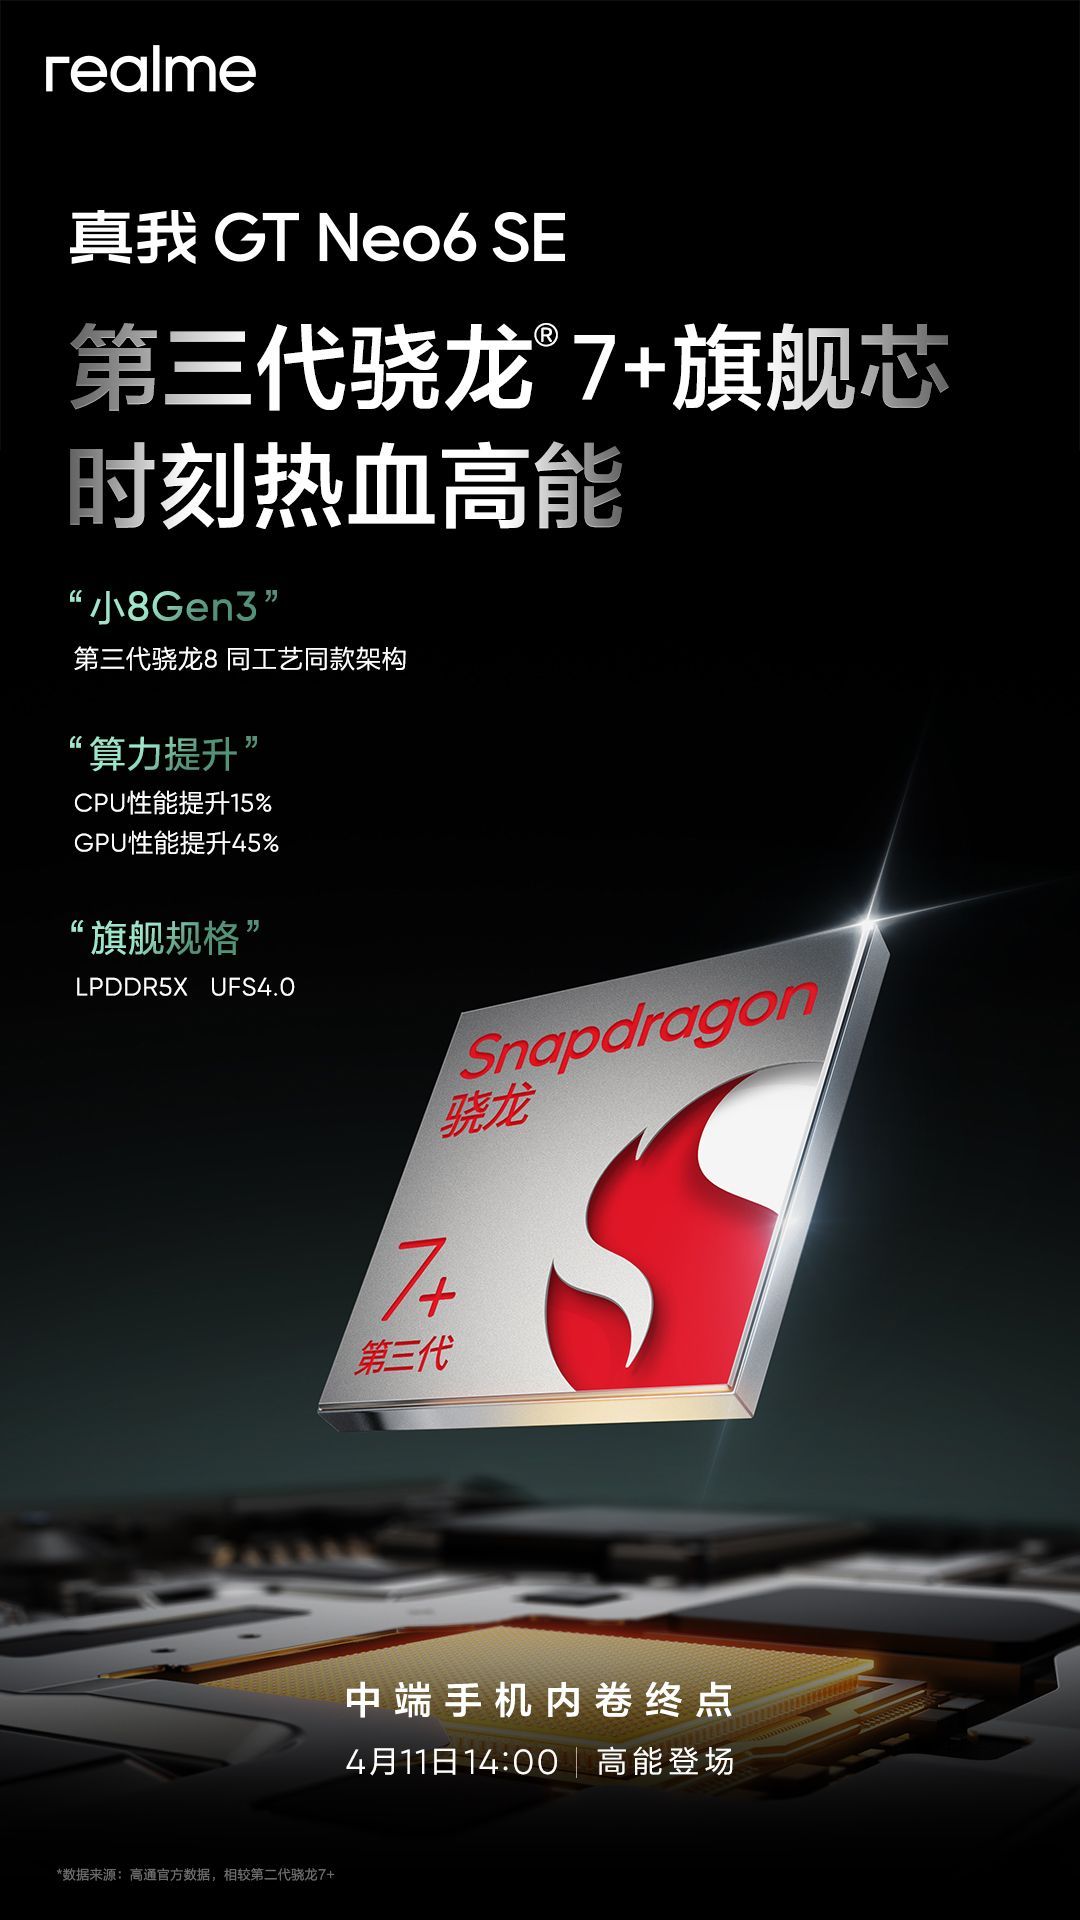 Realme GT Neo 6 SE LPDDR5x RAM, UFS 4.0 storage